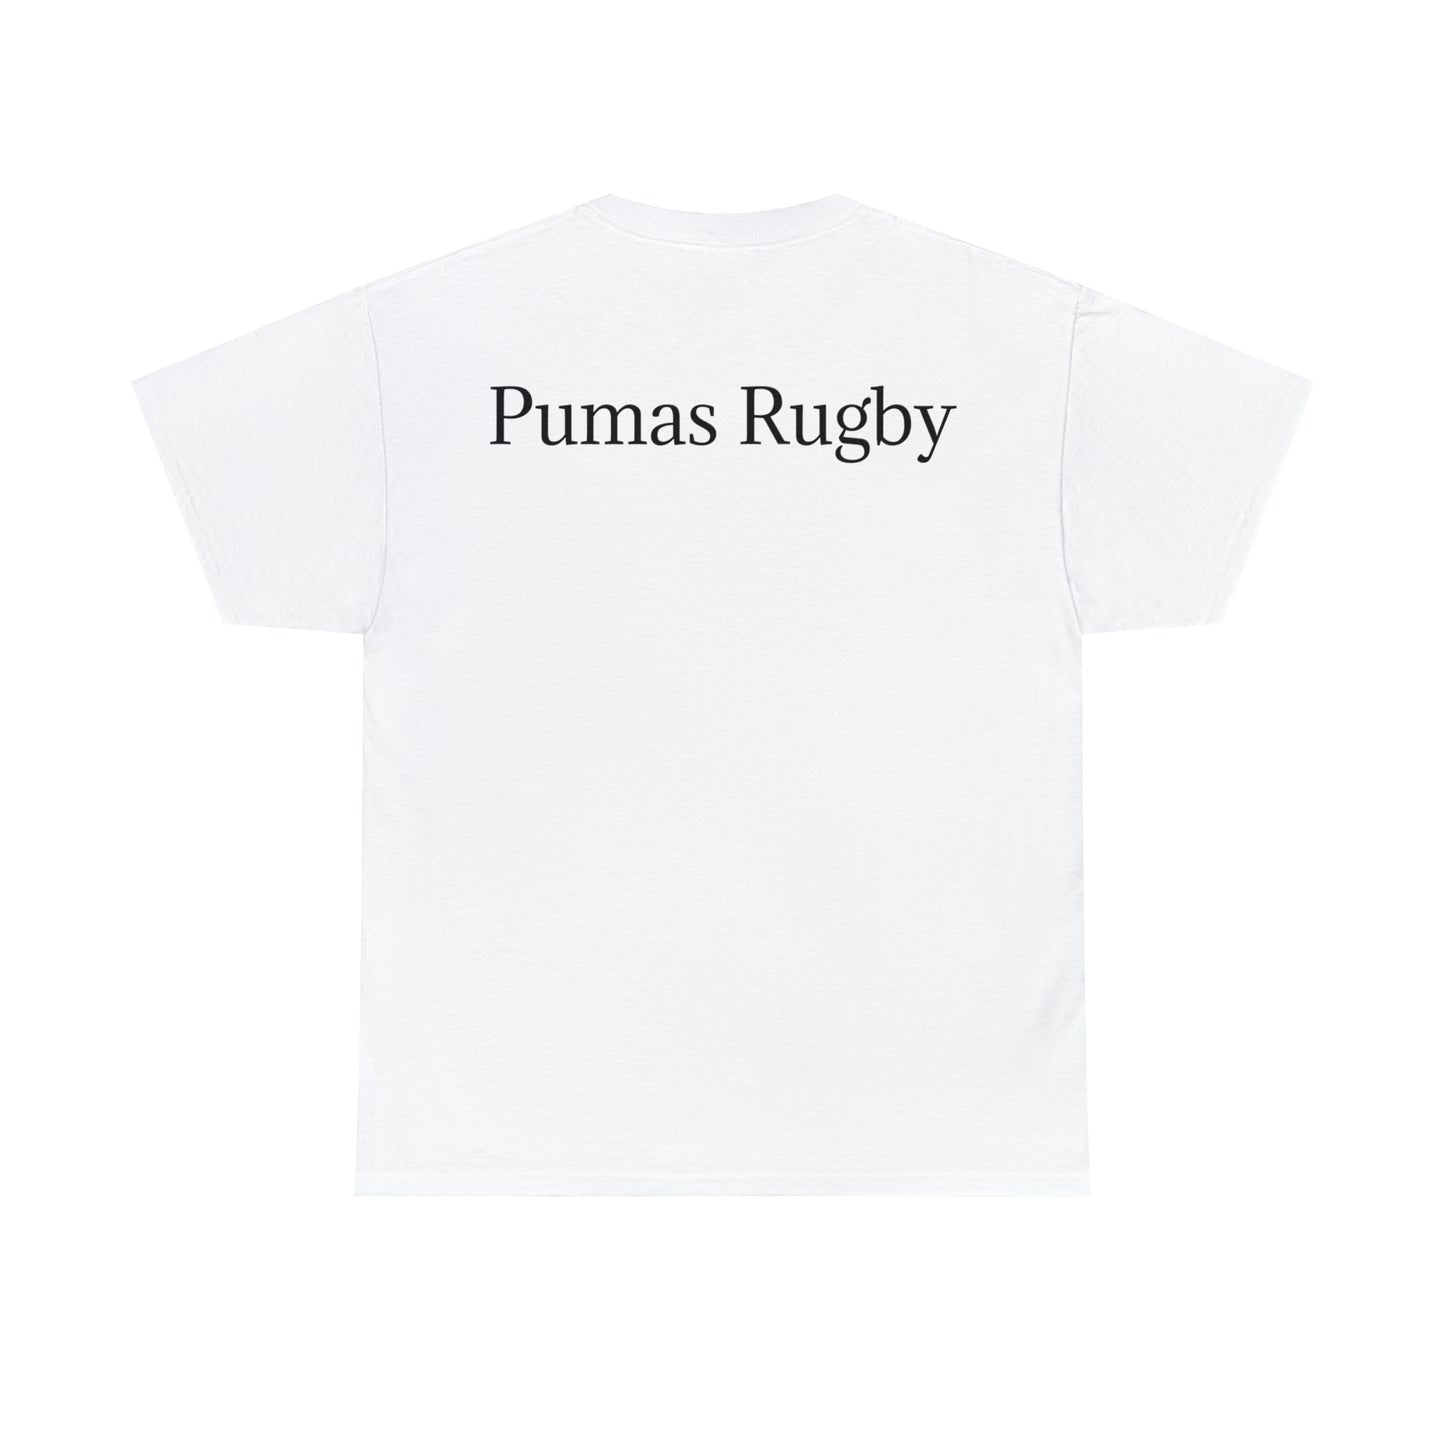 Pumas with RWC - light shirts